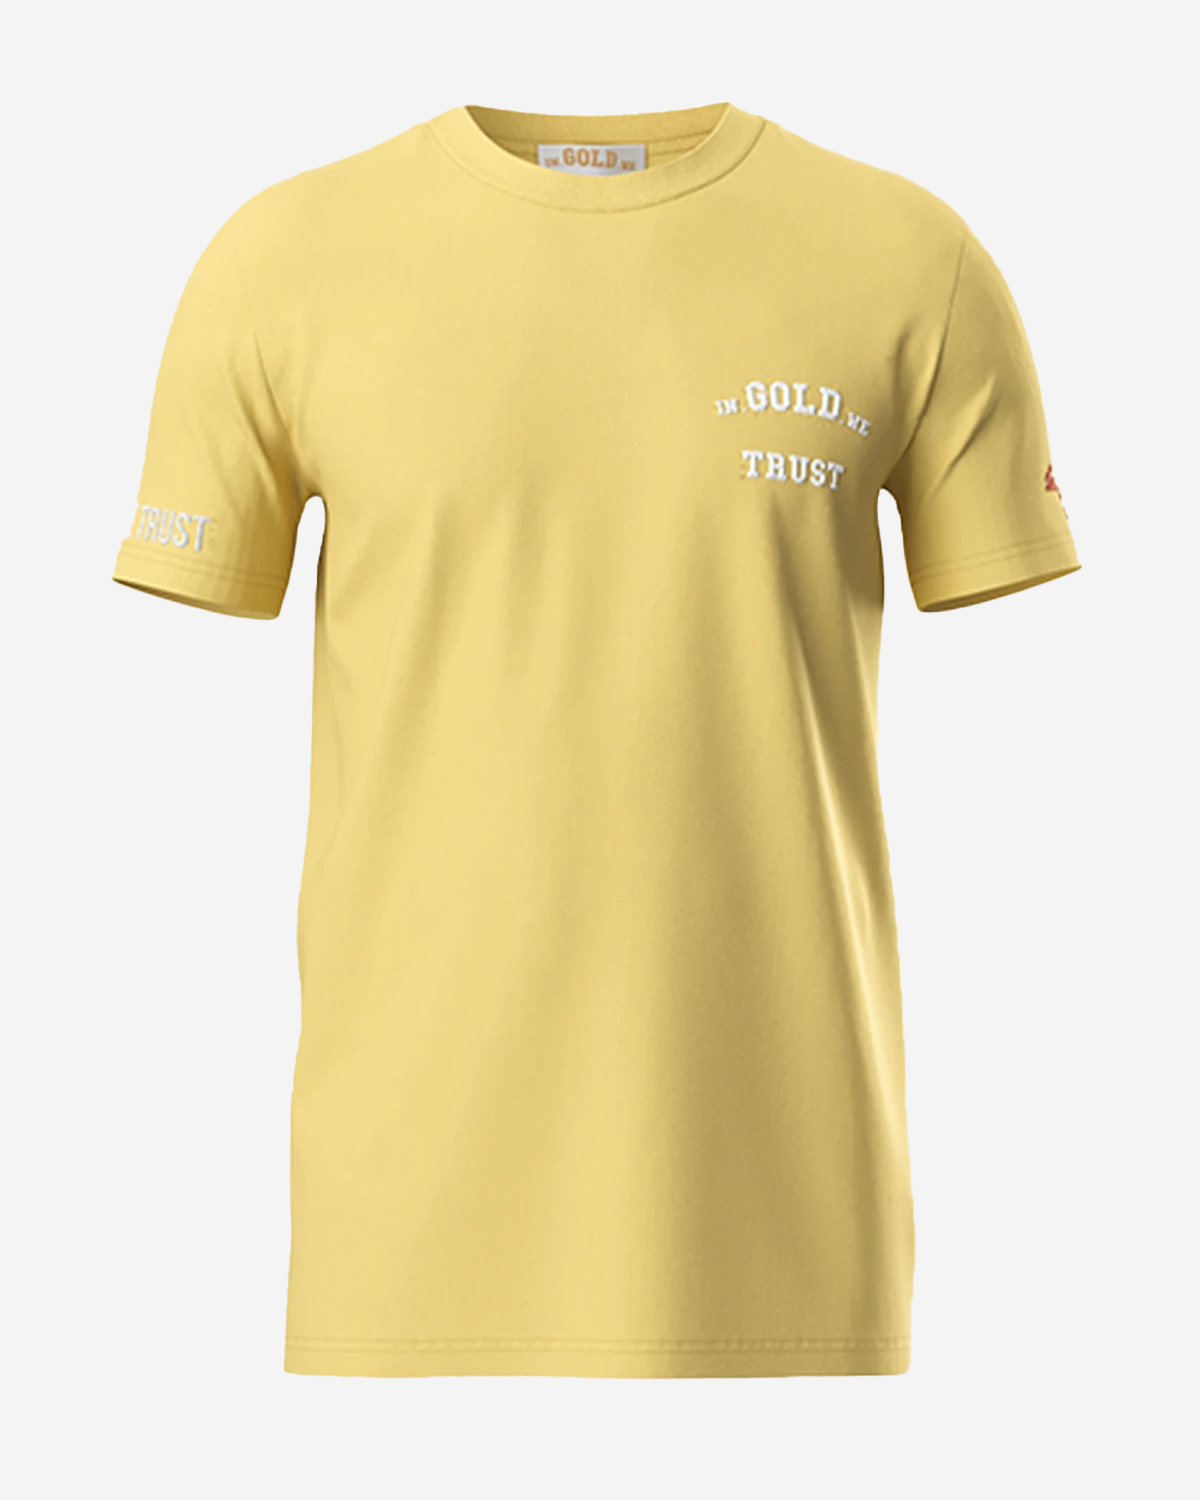 In Gold We Trust T-shirt The Pusha Sunshine